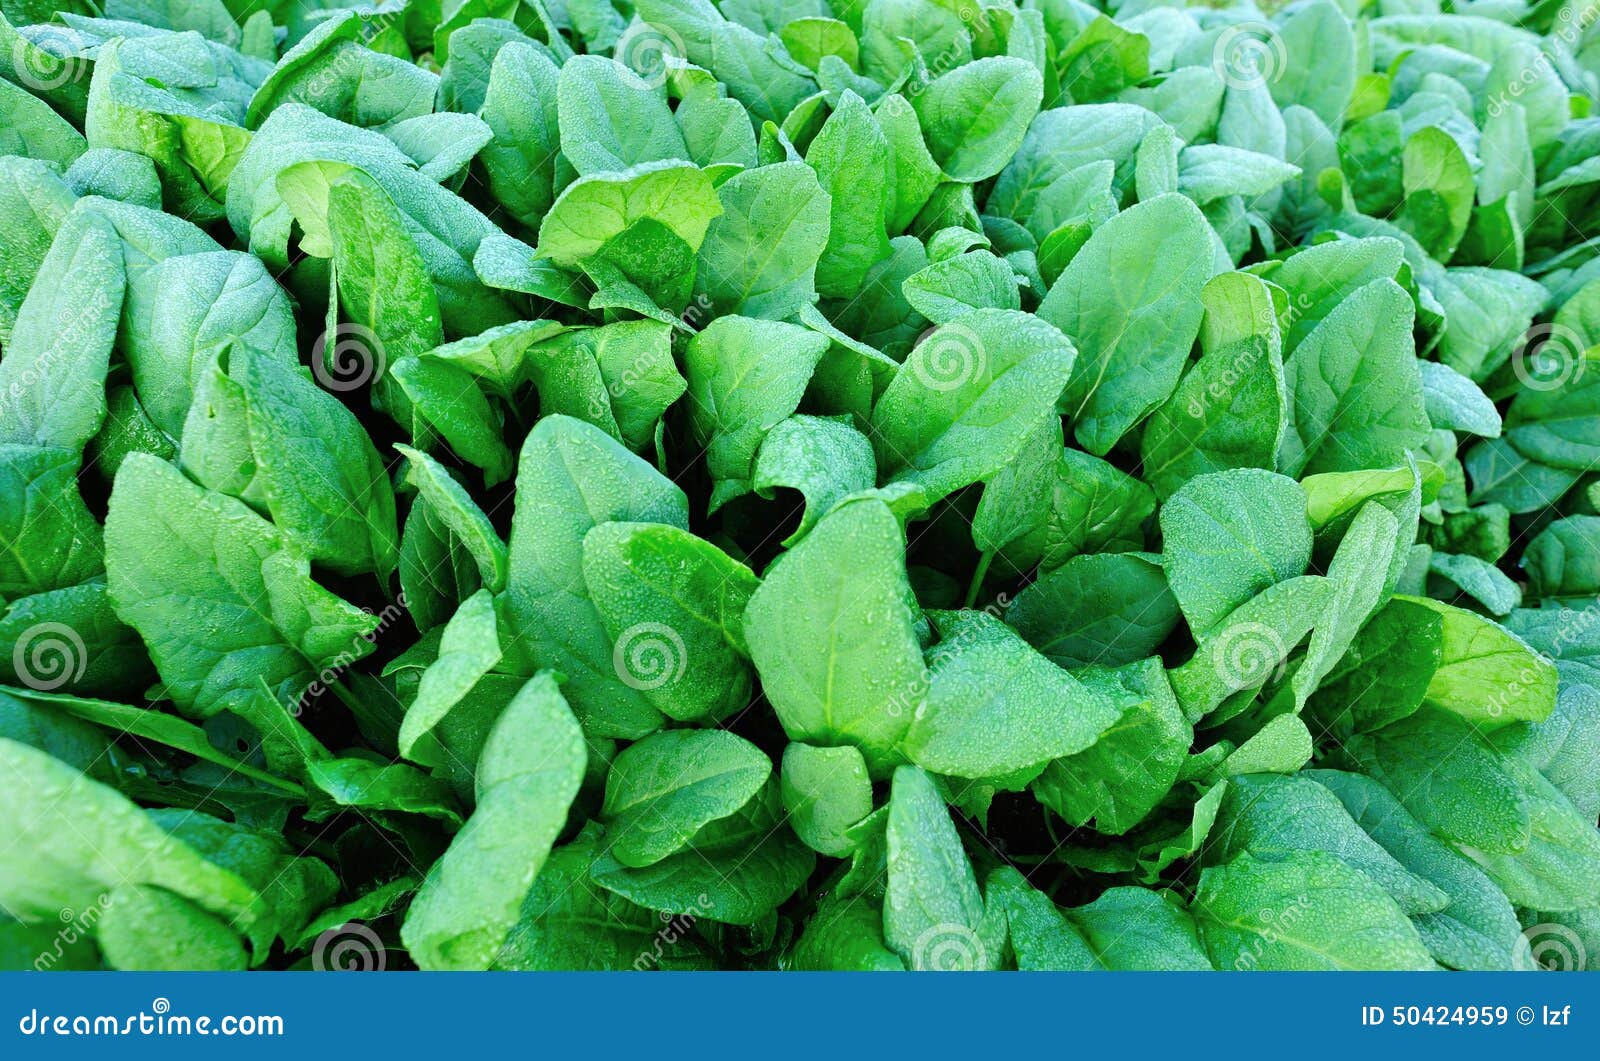 spinach plantation